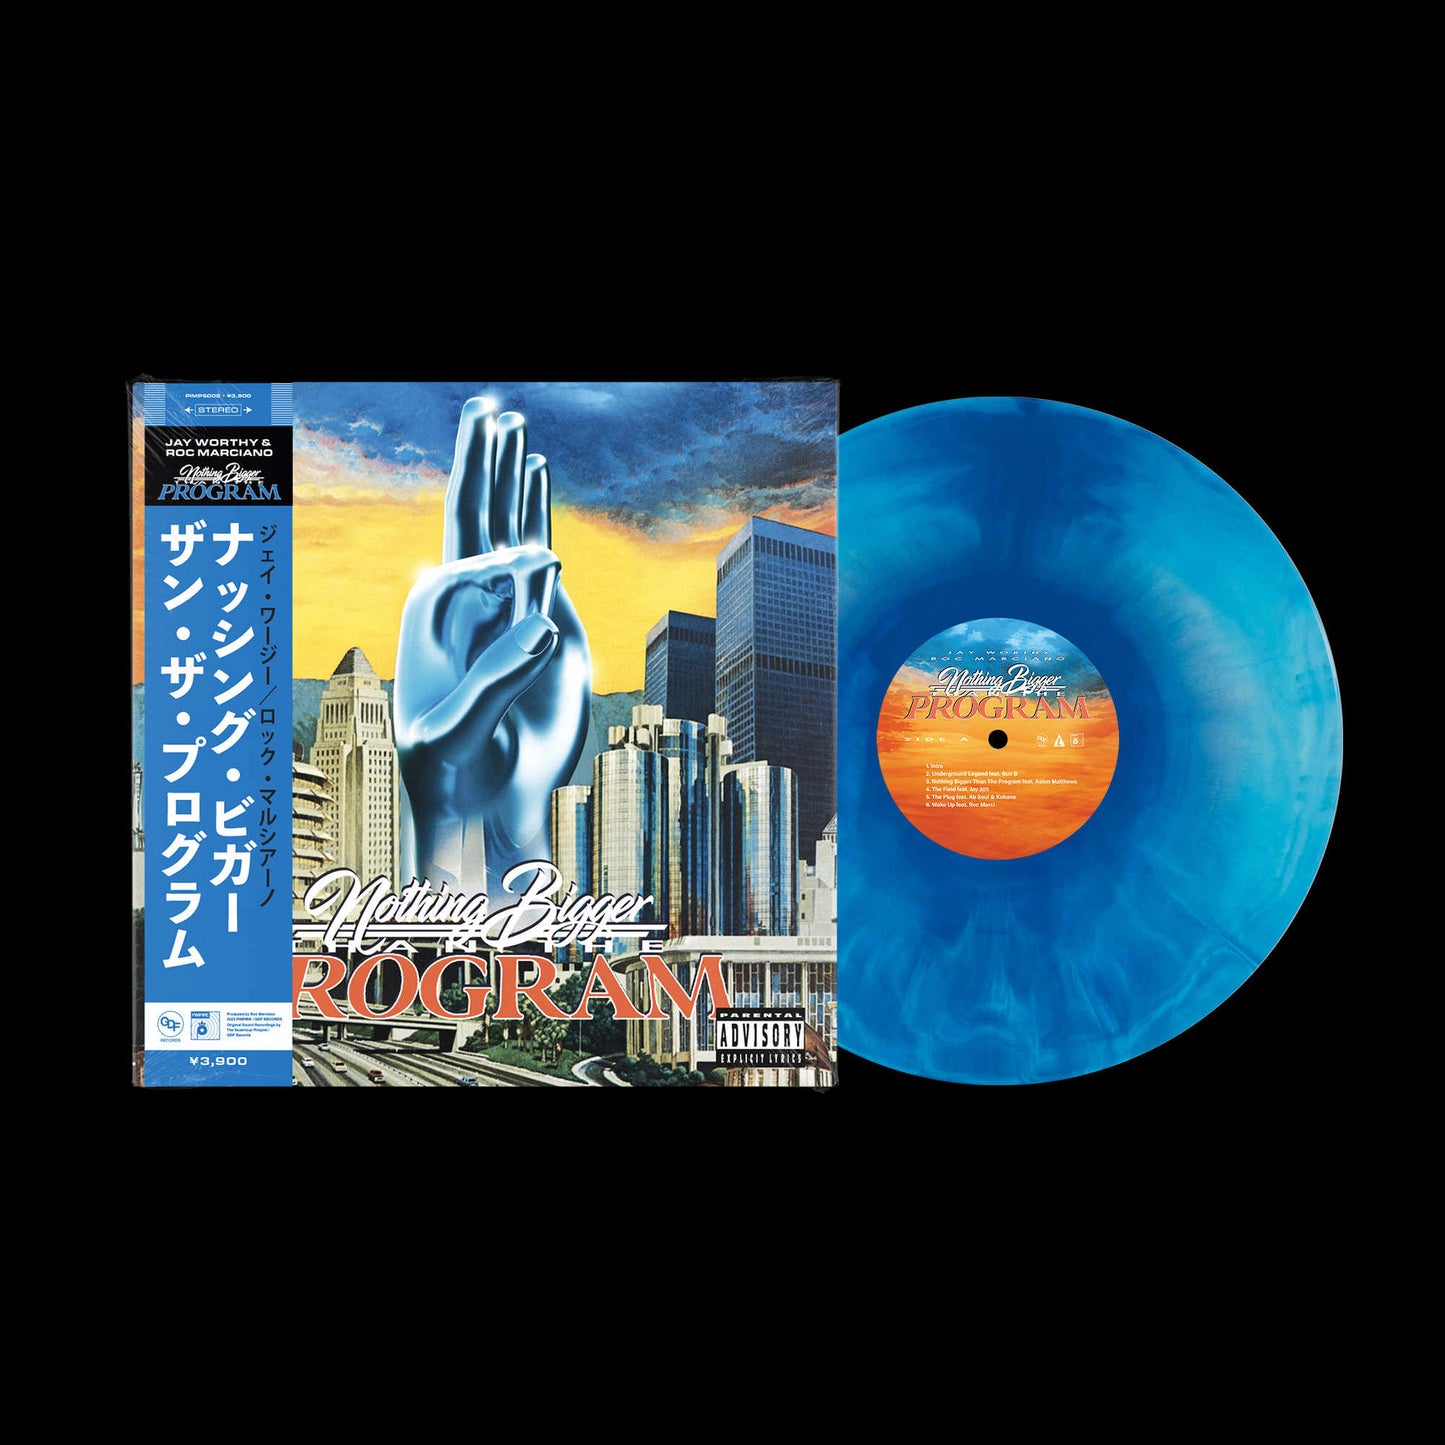 Nothing Bigger Than The Program (Blue Haze LP)